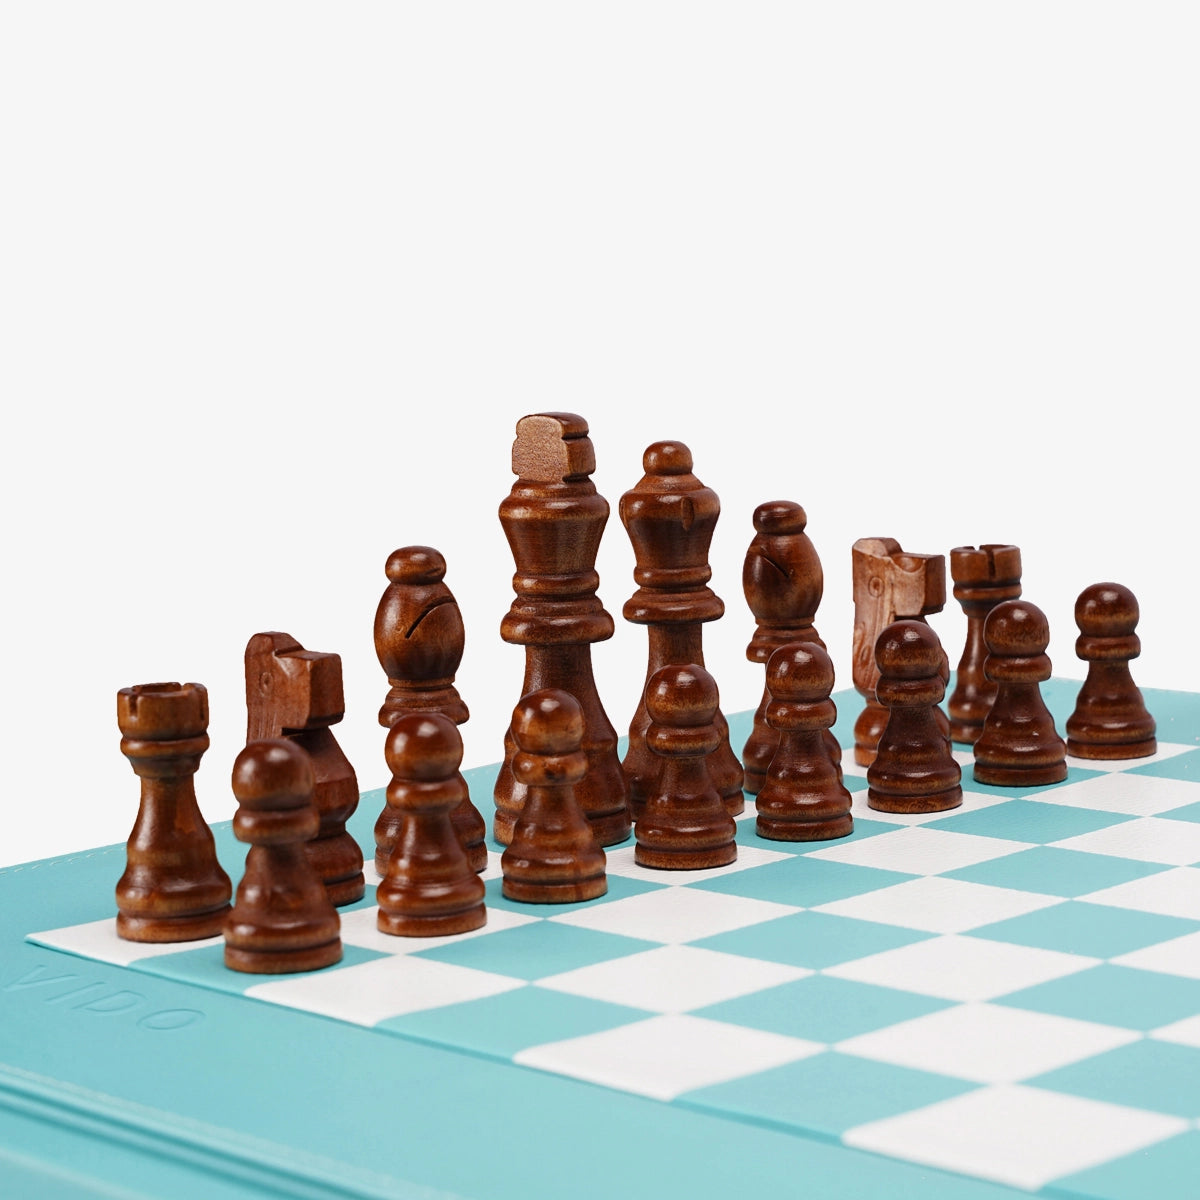 Turquoise Chess Set - VIDO USA